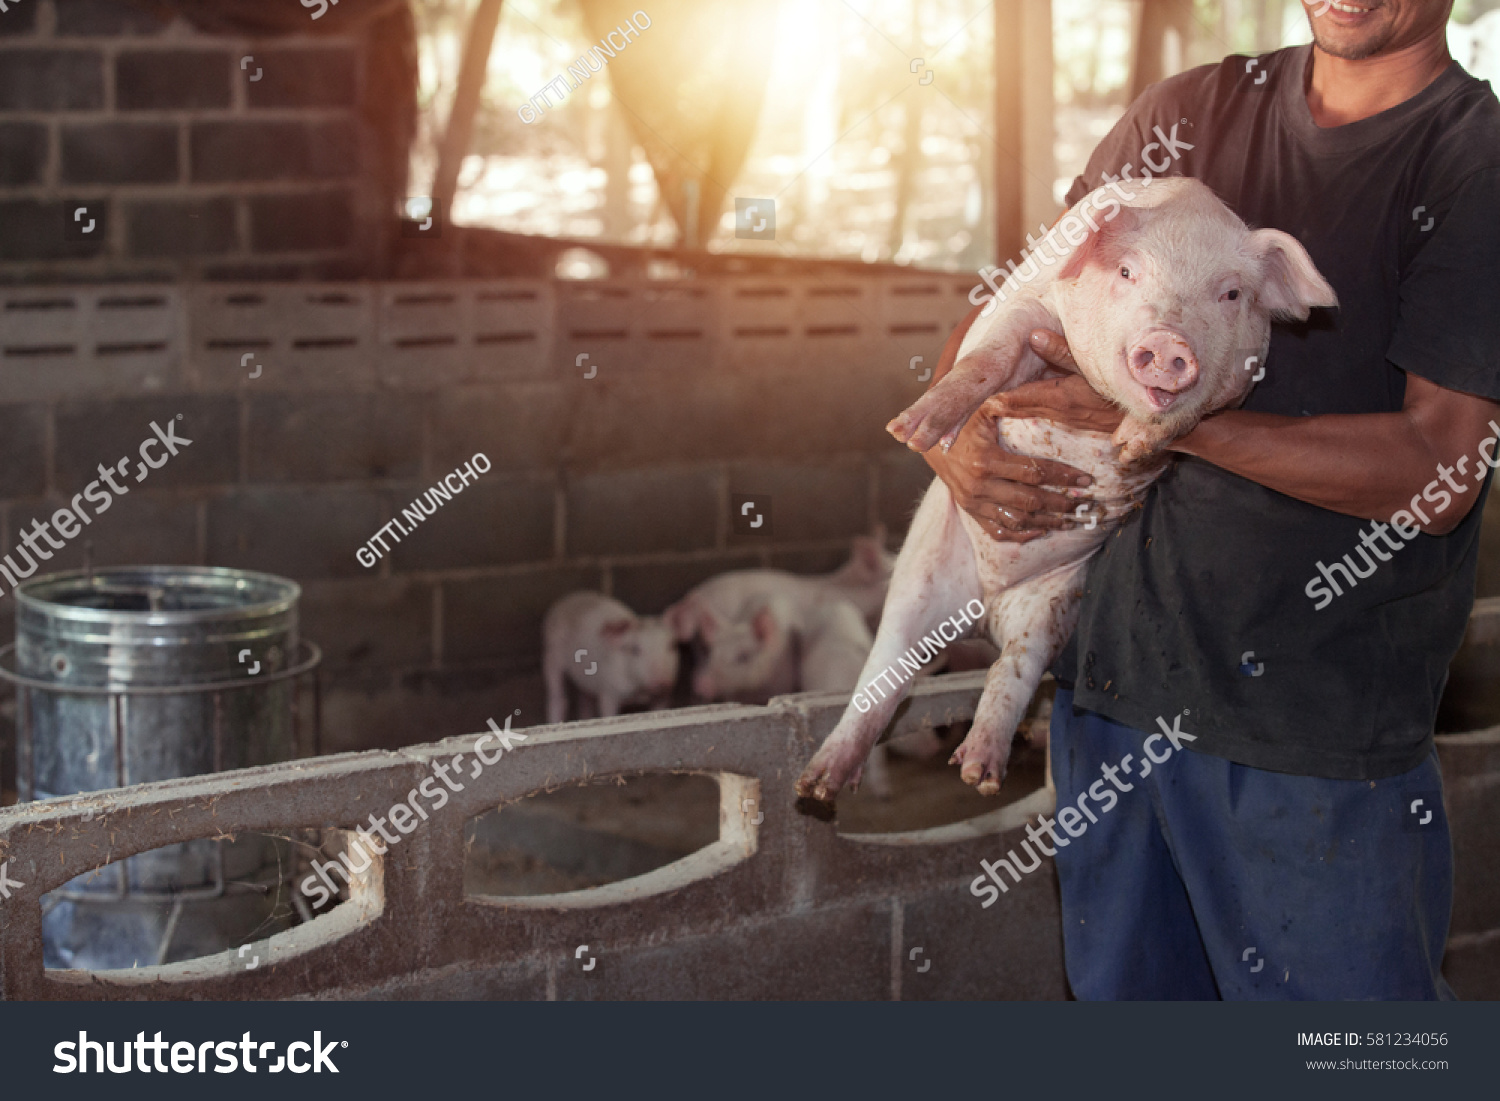 Hog Farm Stockfoto 581234056 Shutterstock.